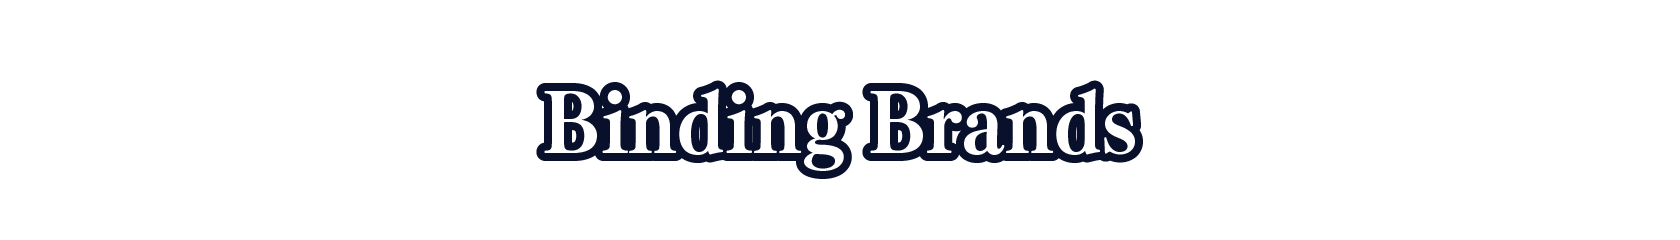 Binding Brands